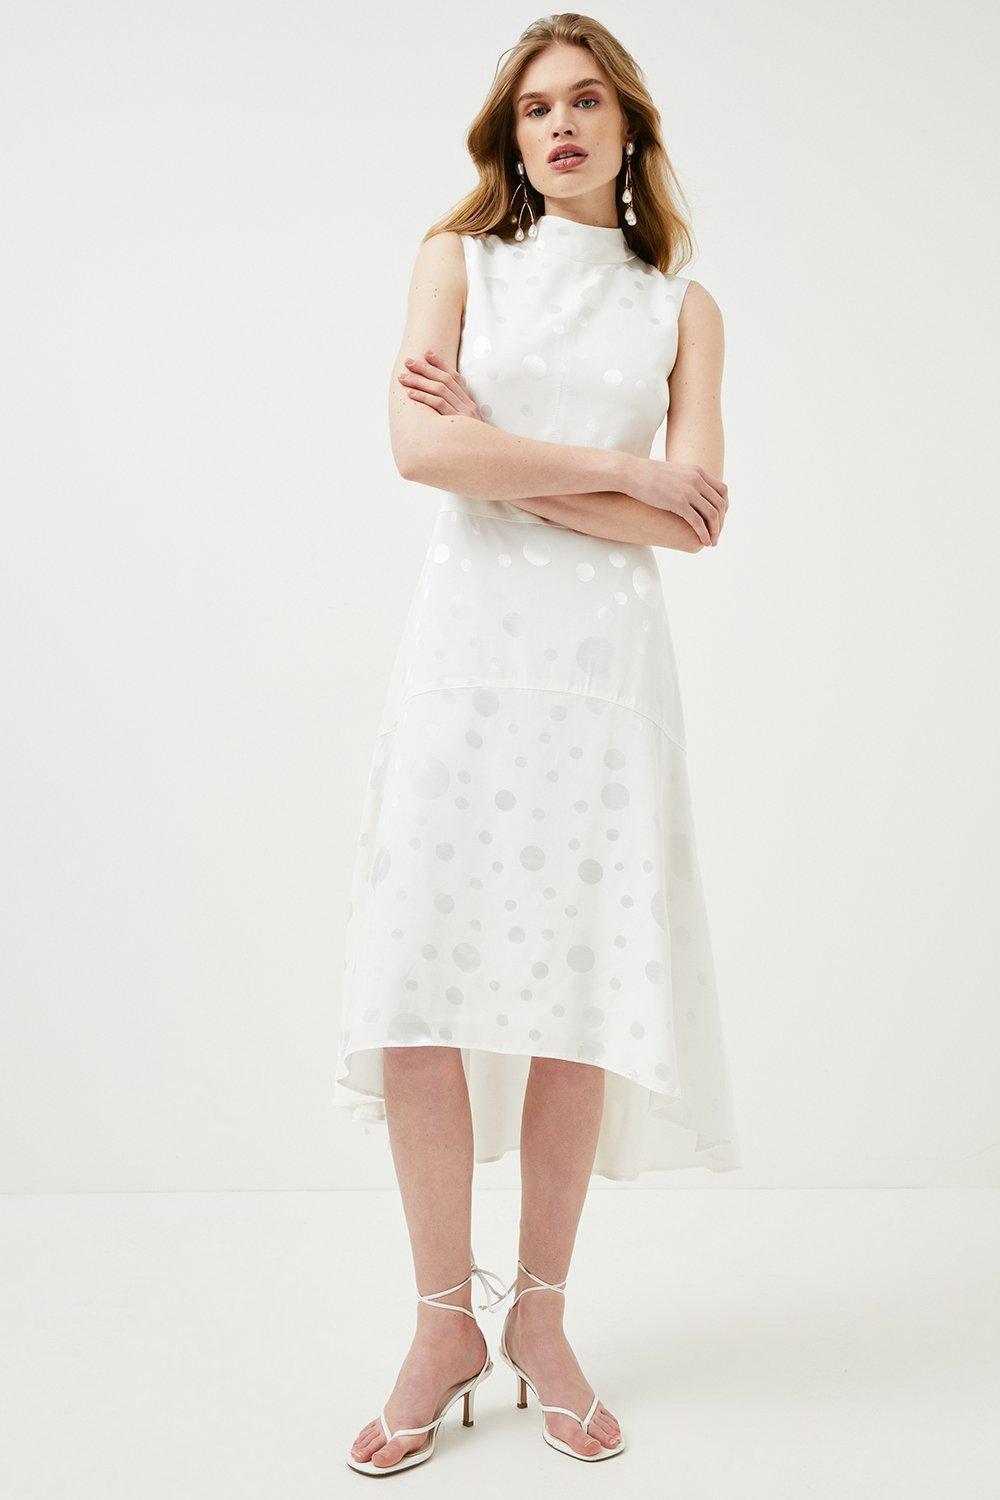 Model wearing a high neck polka dot print casual wedding dress